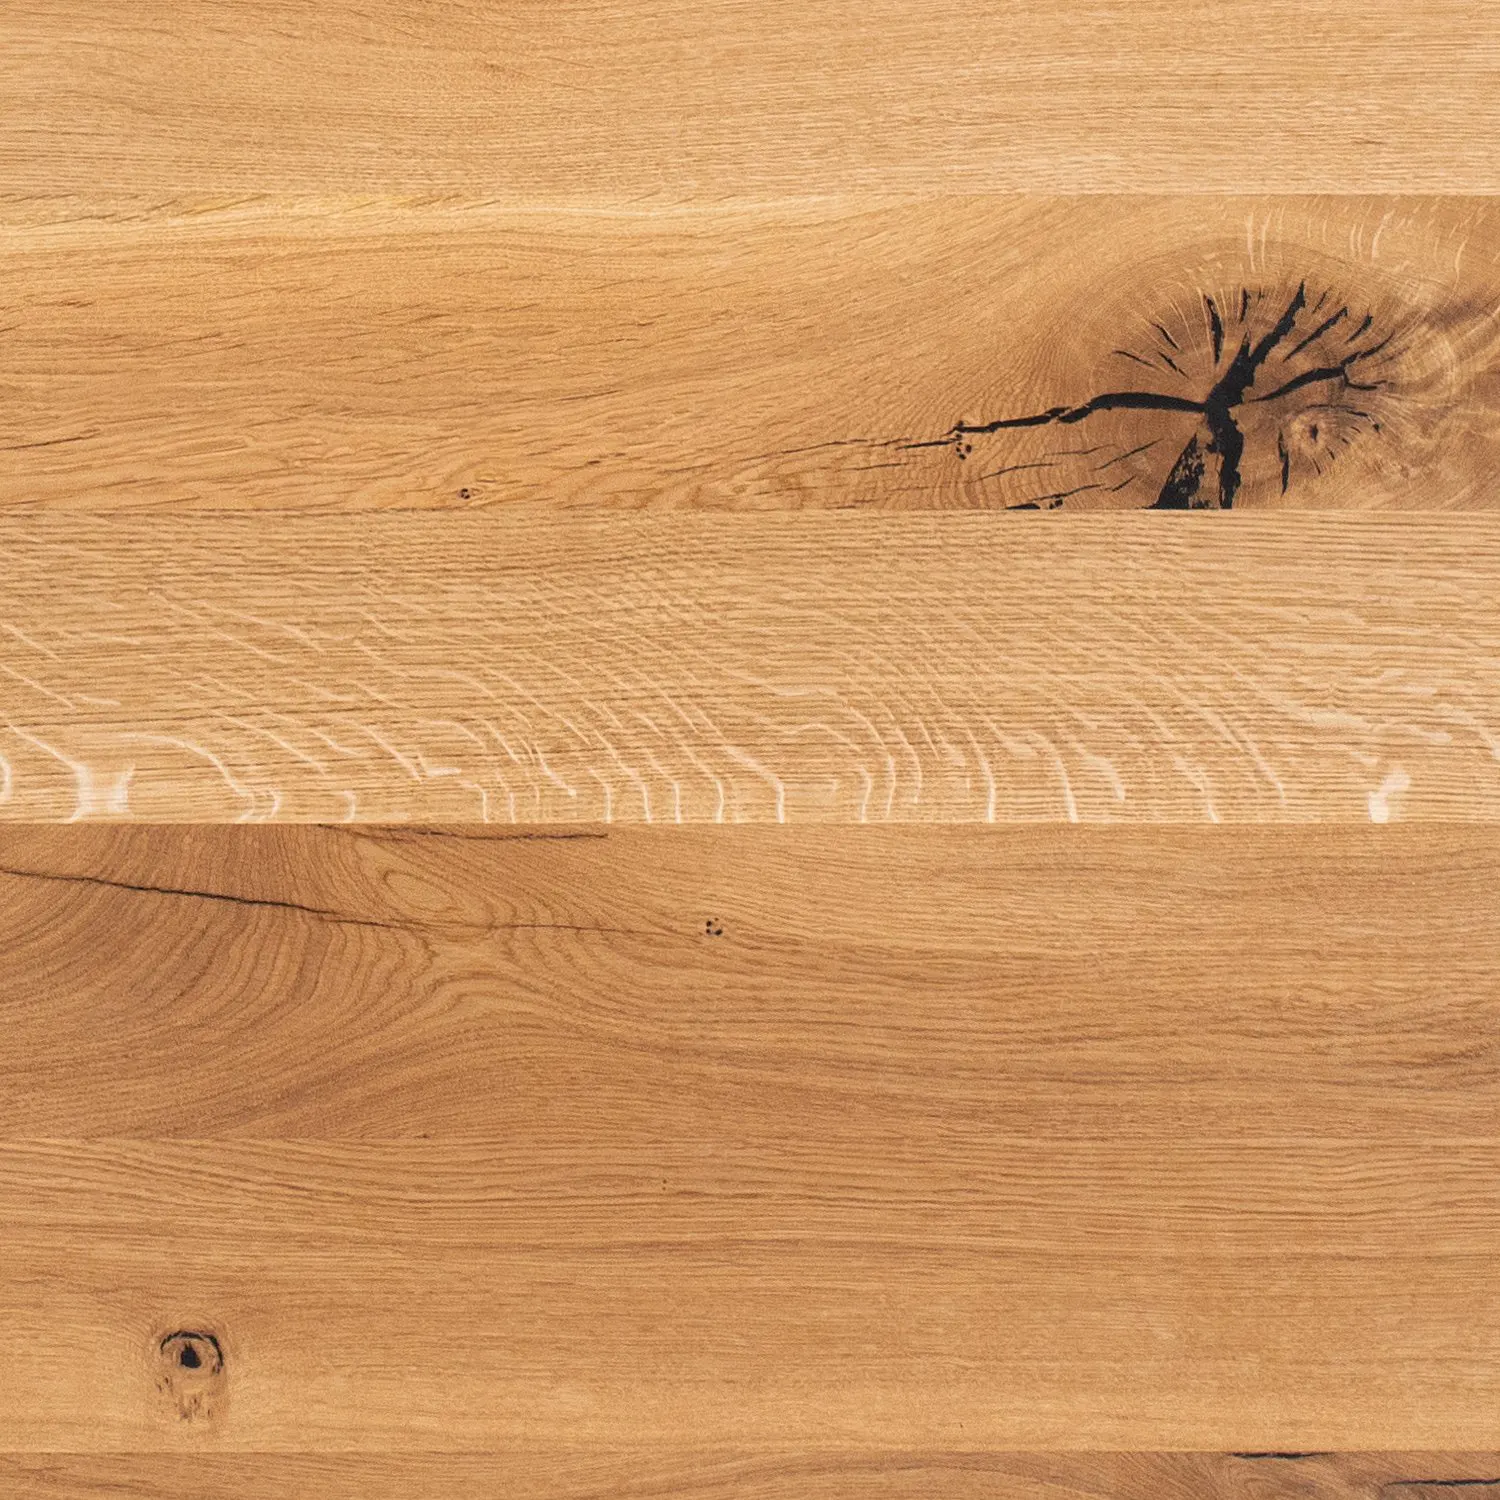 Holzbild Maserung Tischplatte